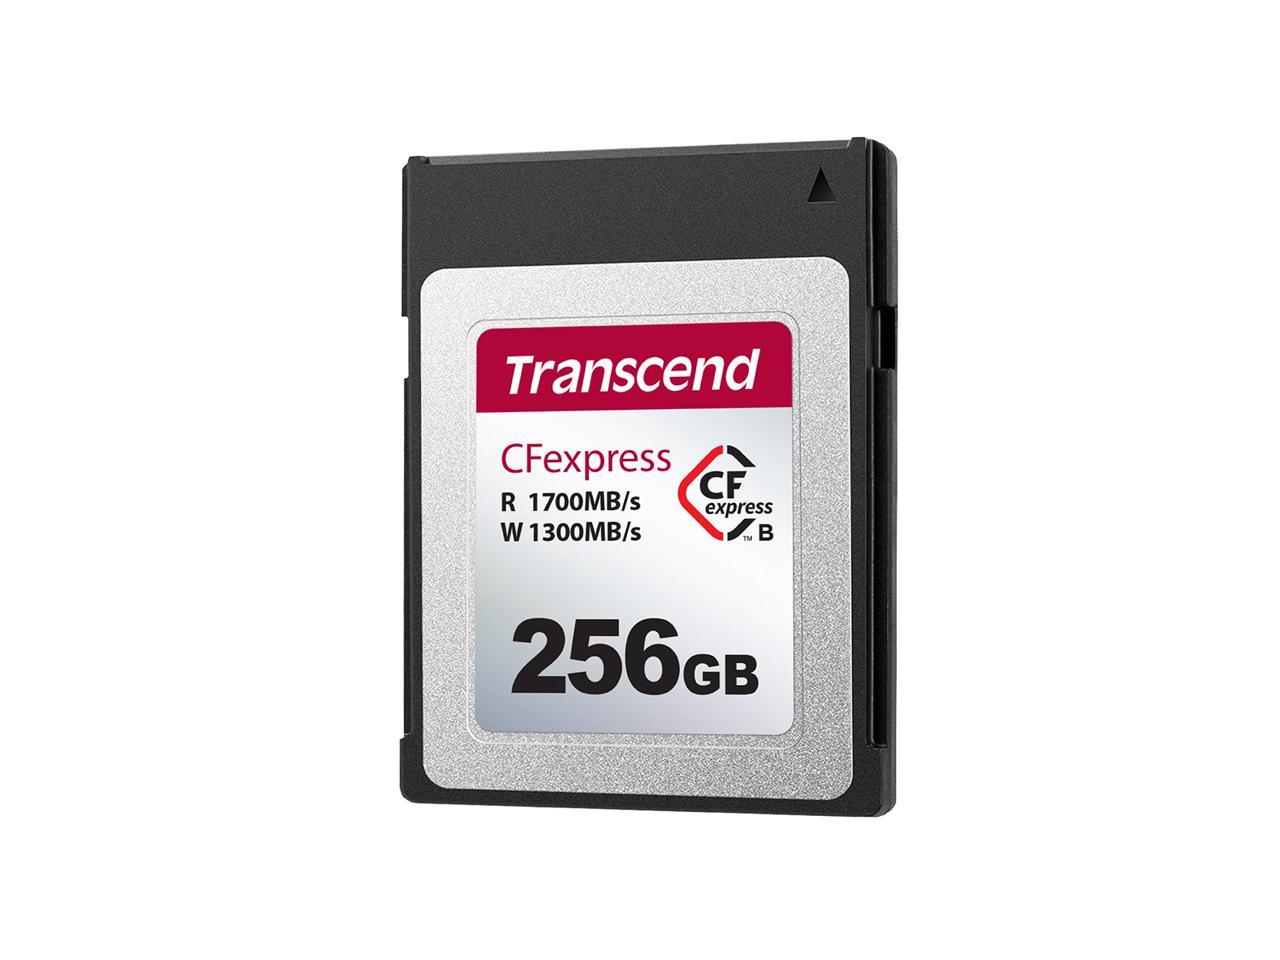 256GB Transcend CFexpress 820 Type B Memory Card 1700MB/s Read 1300MB/sec Write